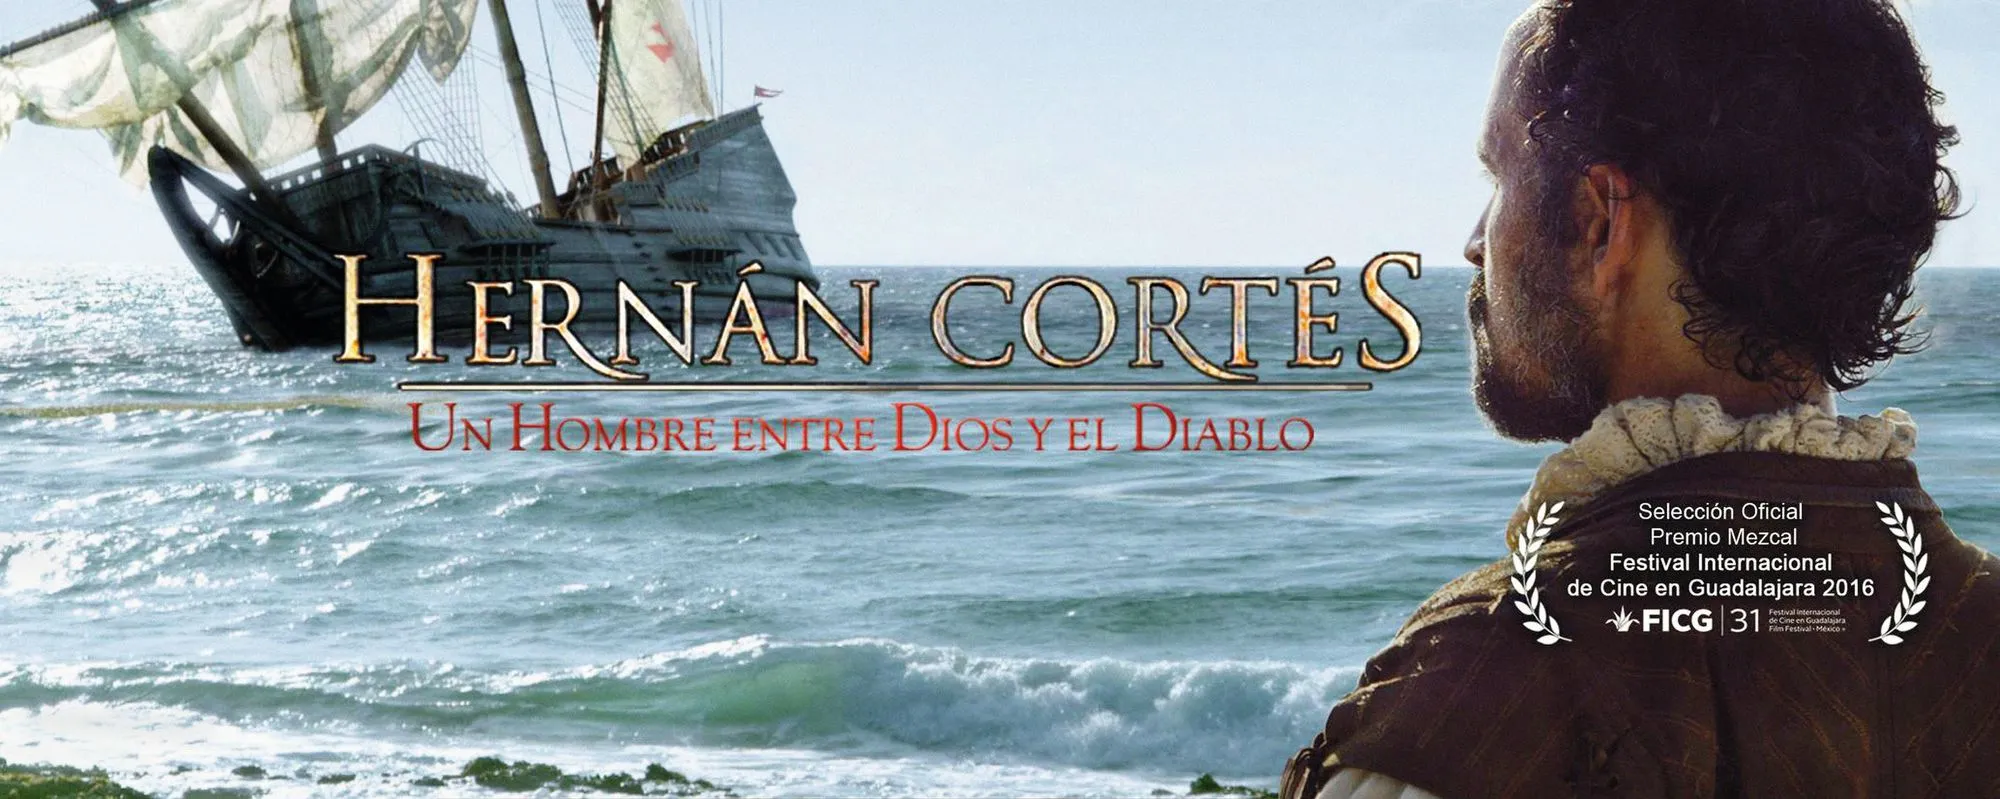 Cartel del documental Hernán Cortés de Fernando González Sitges, 2016.